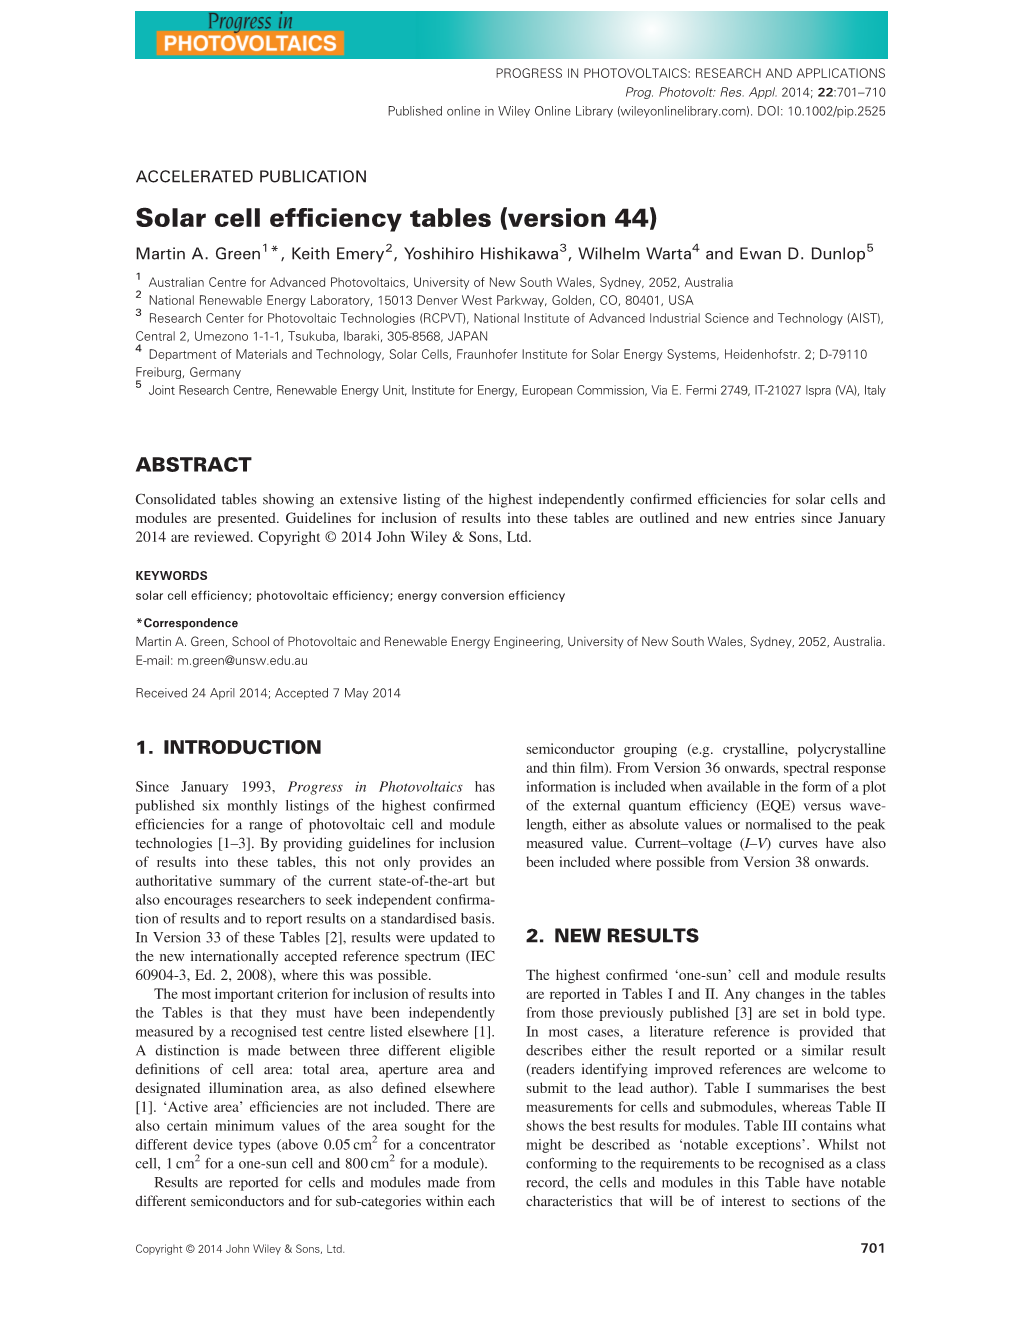 Solar Cell Efficiency Tables (Version